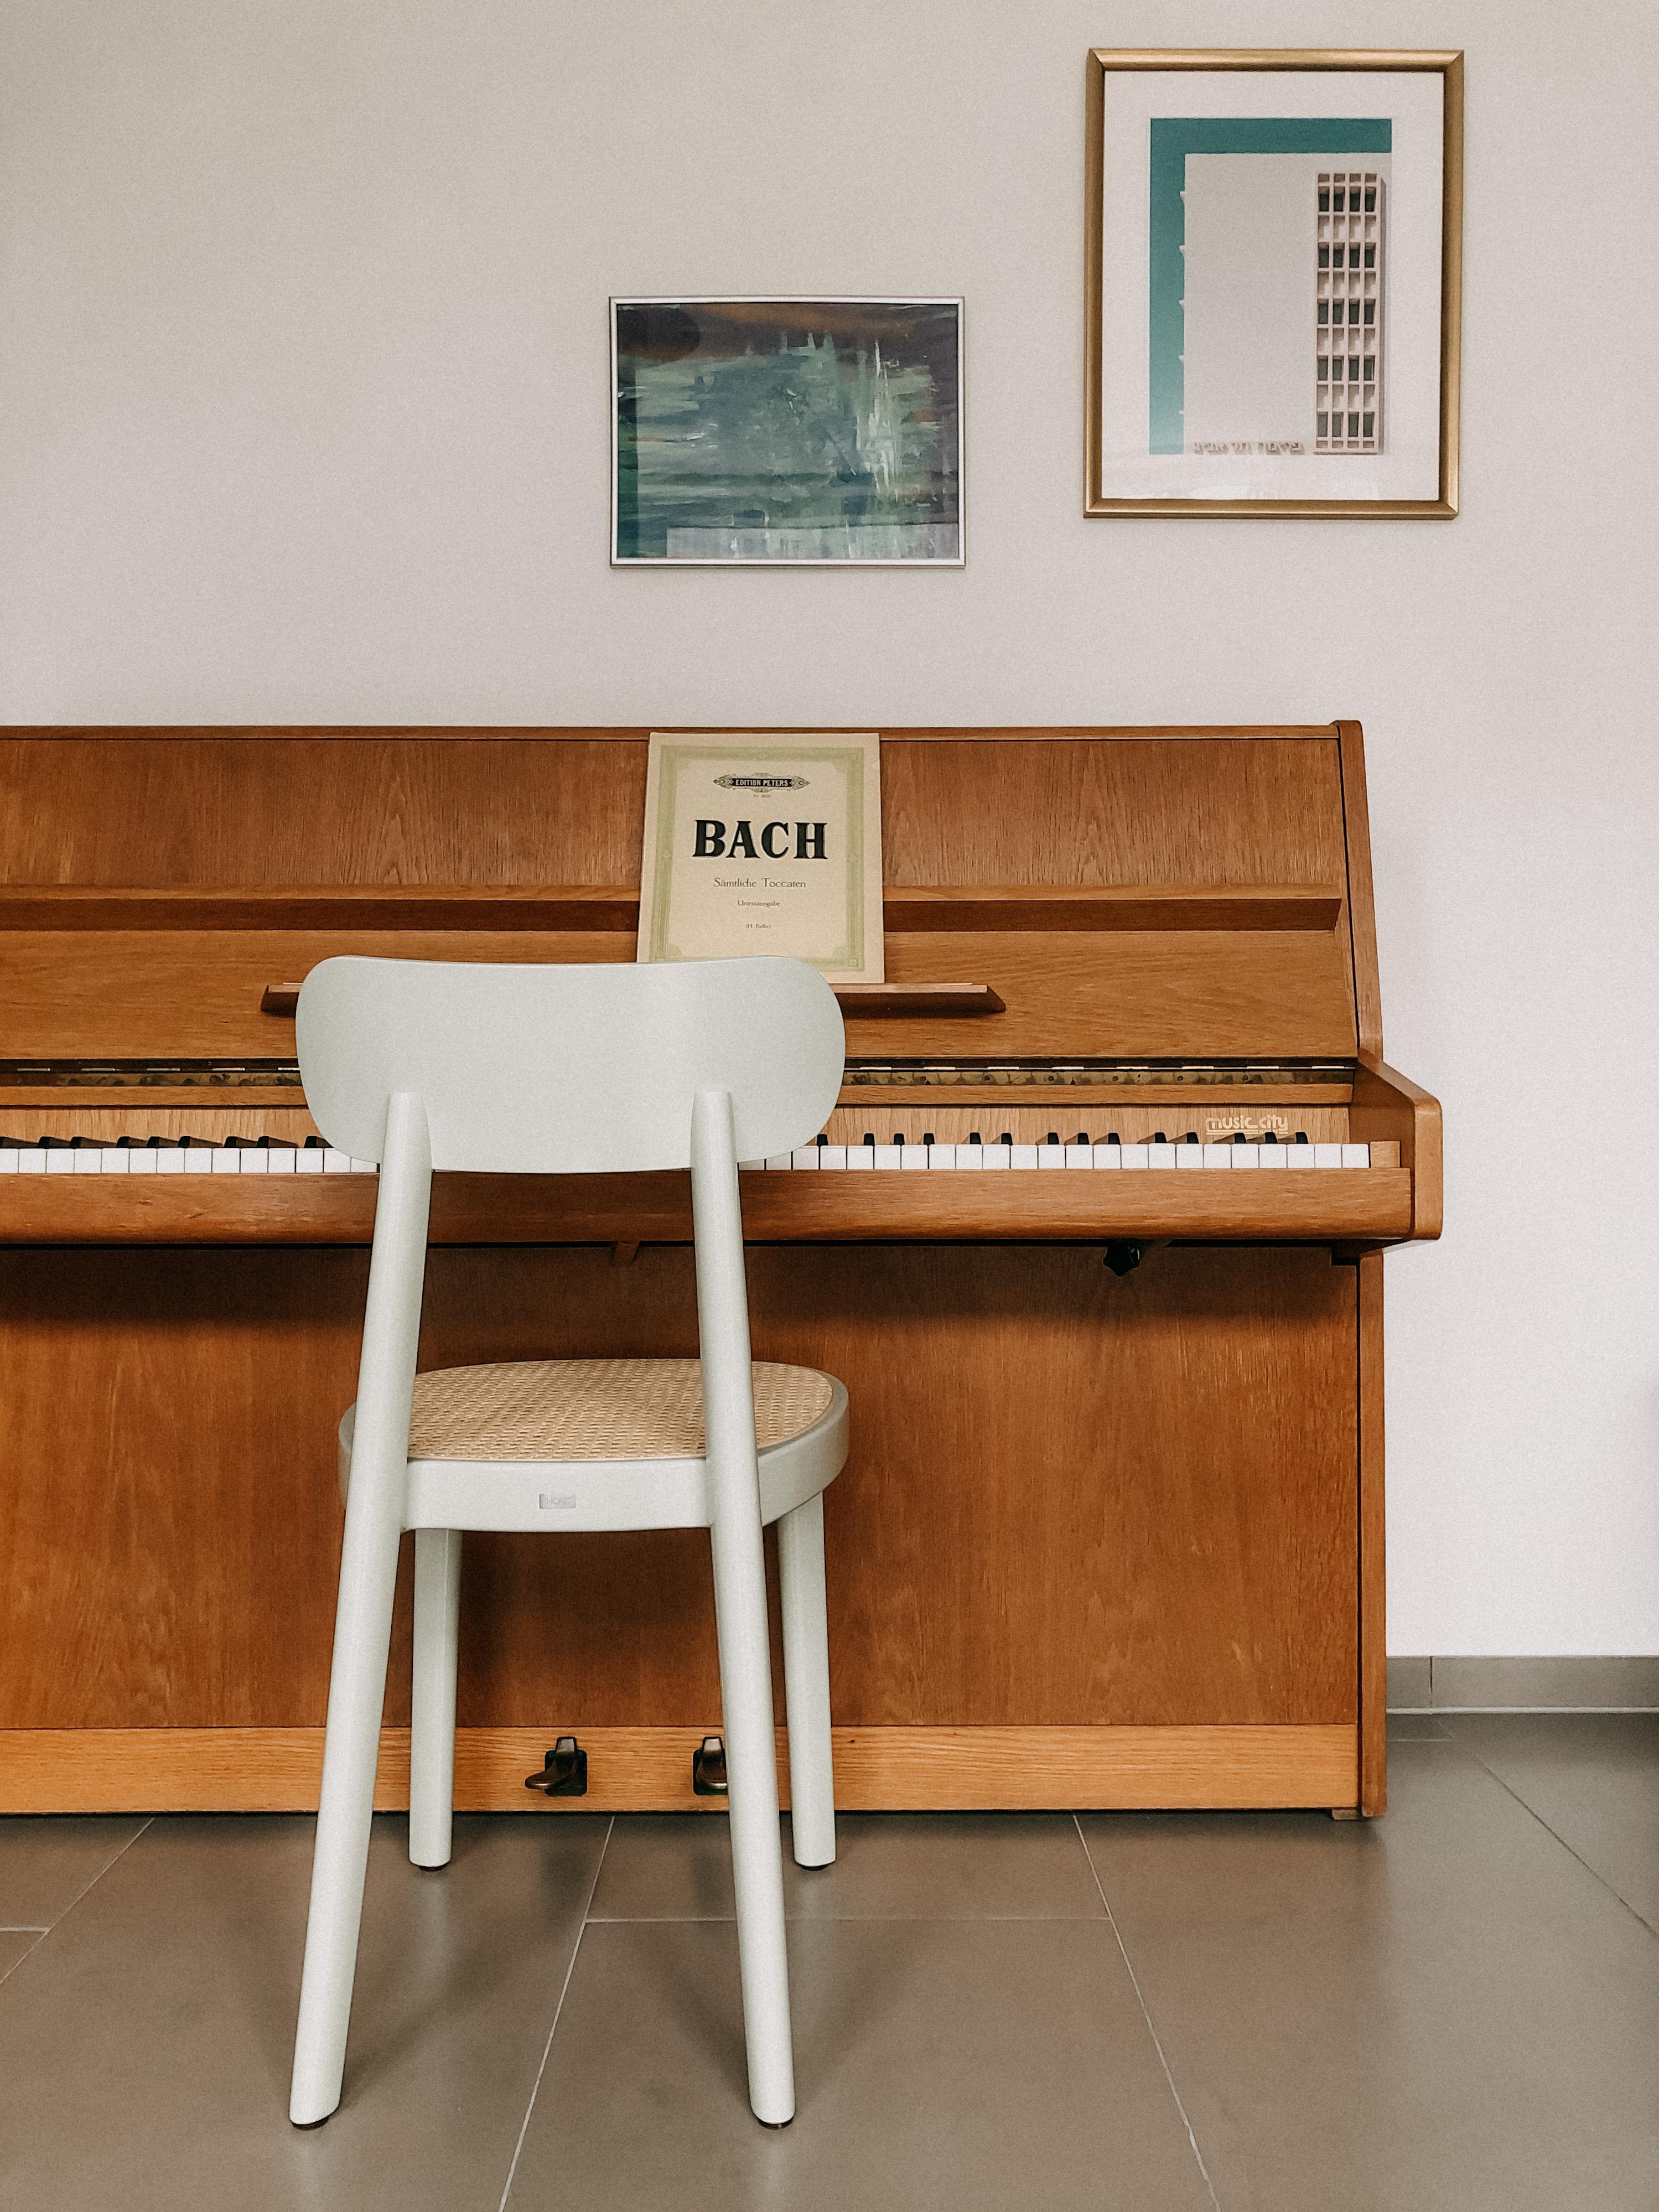 #livingroom #wohnzimmer #thonet #piano #klavier #art #telaviv #bauhaus #bach #favoritecomposer #mylivingroom